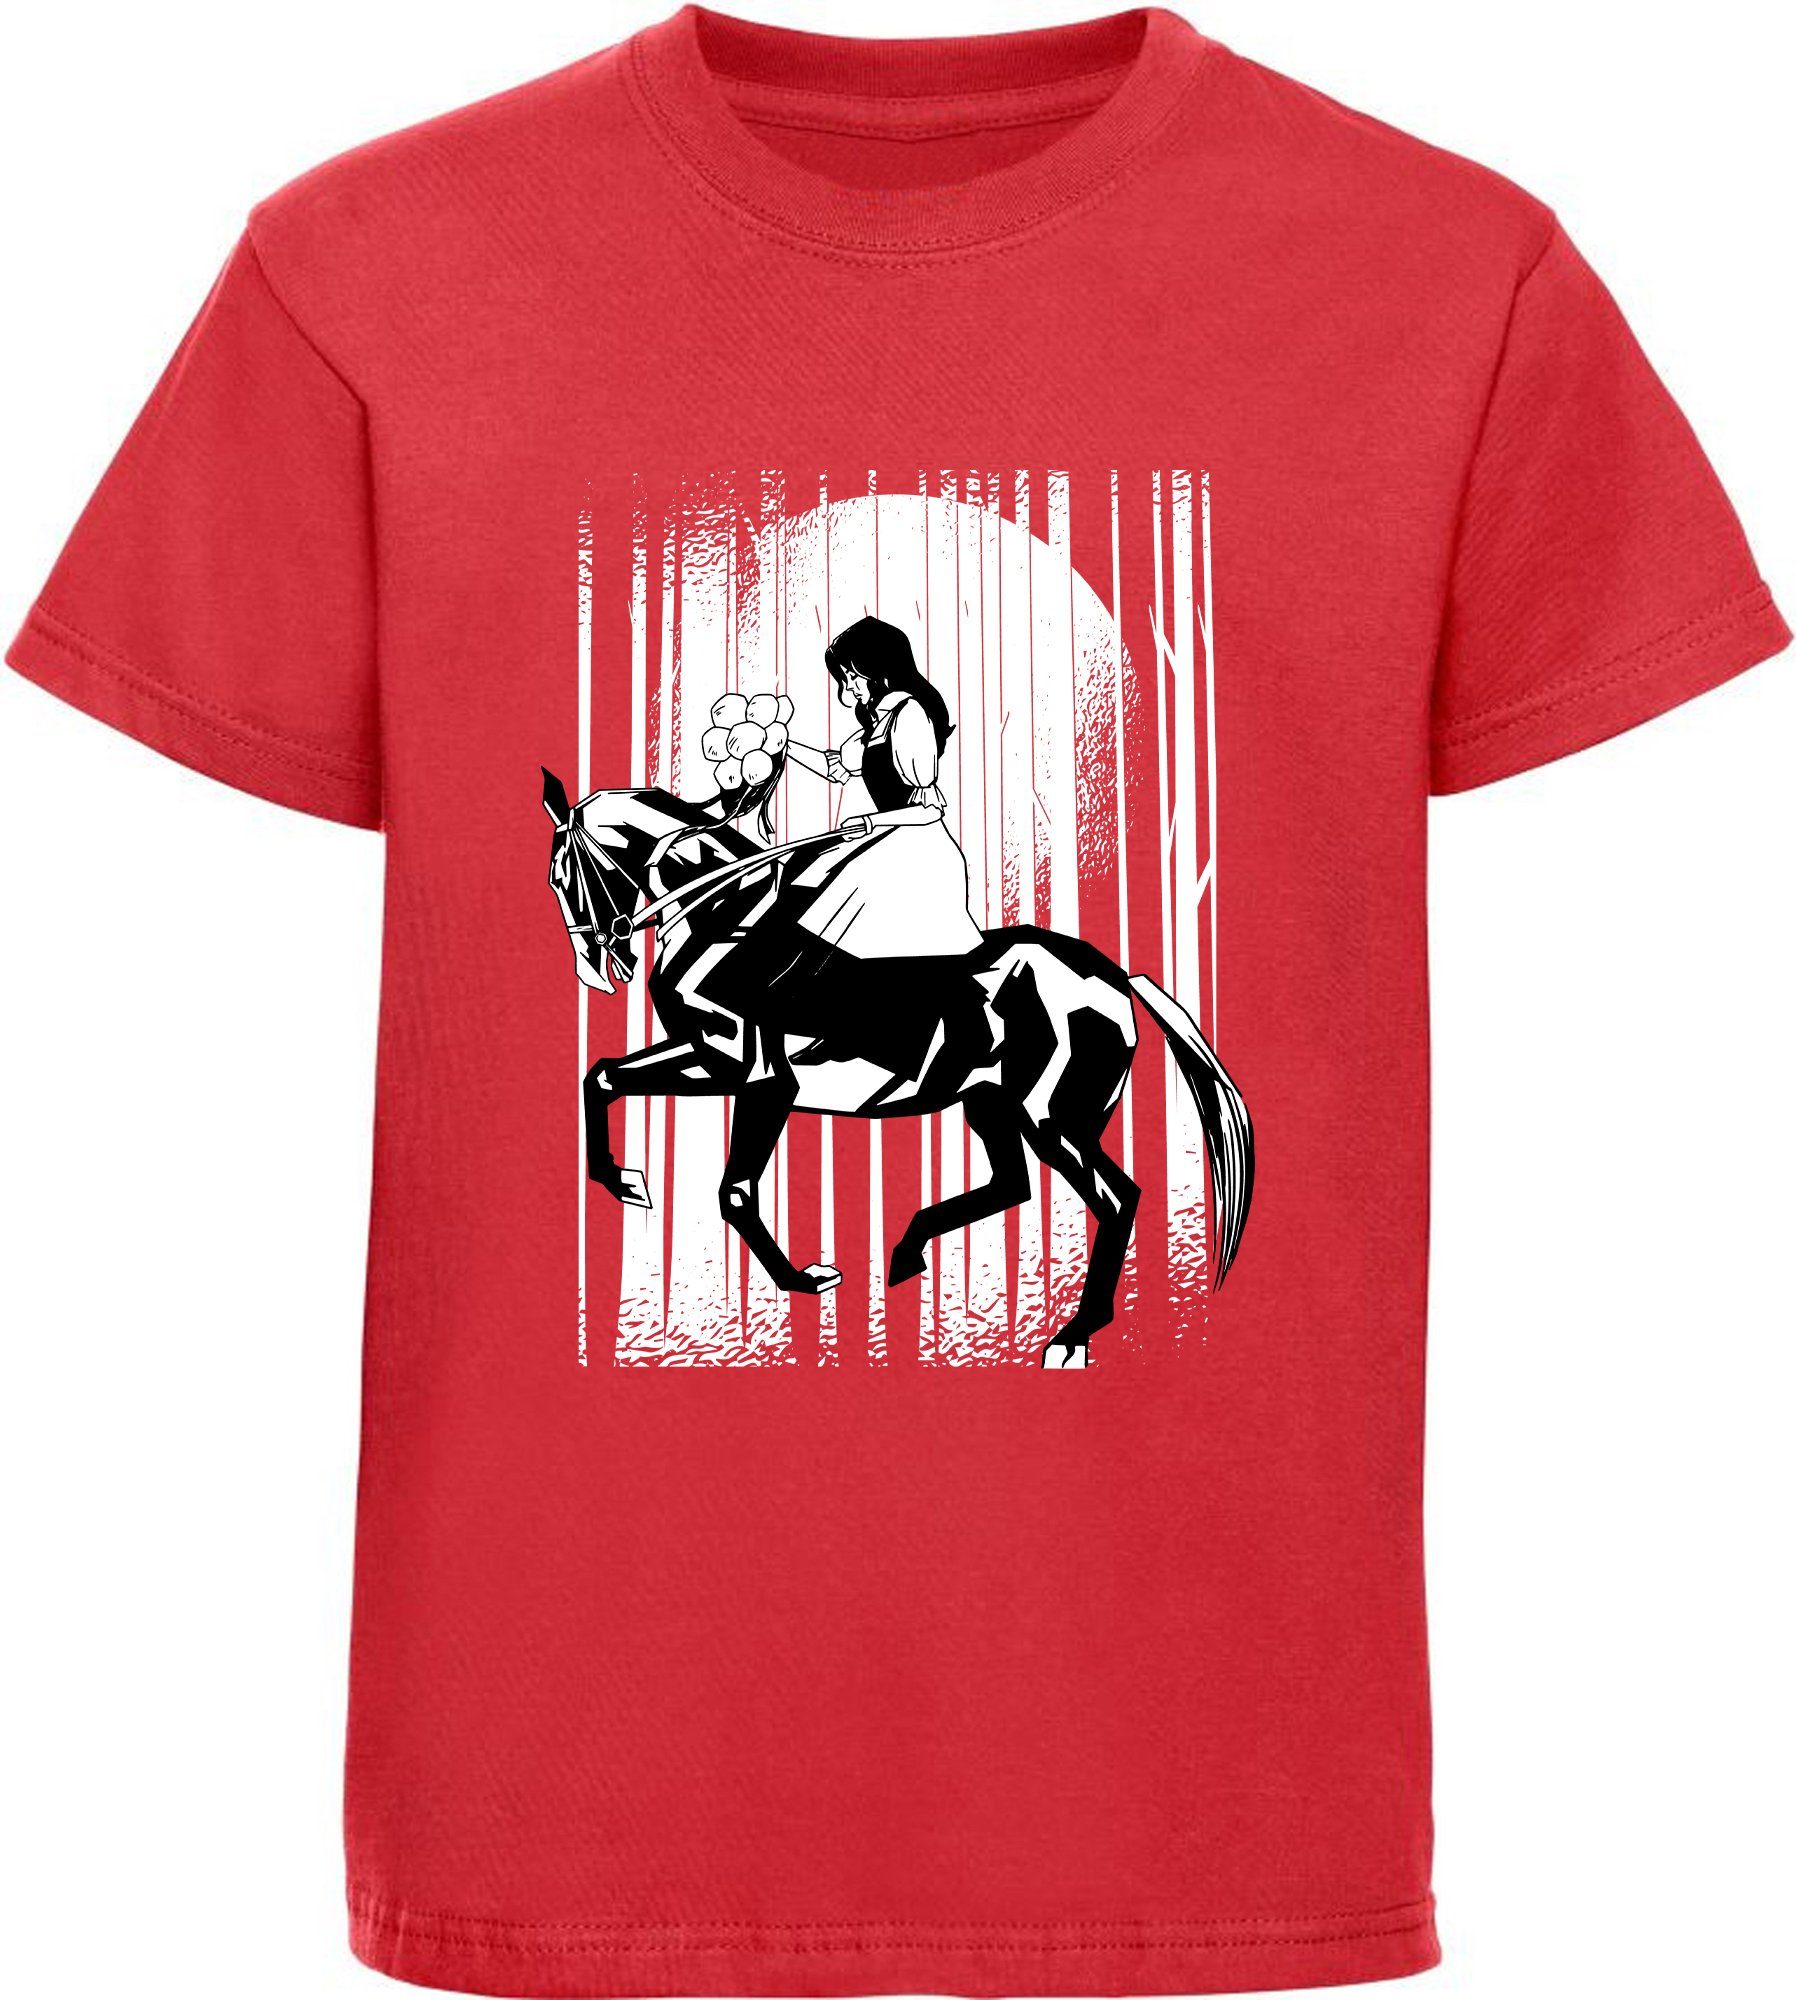 MyDesign24 Print-Shirt bedrucktes Mädchen T-Shirt berittenes Pferd Baumwollshirt mit Aufdruck, i138 rot